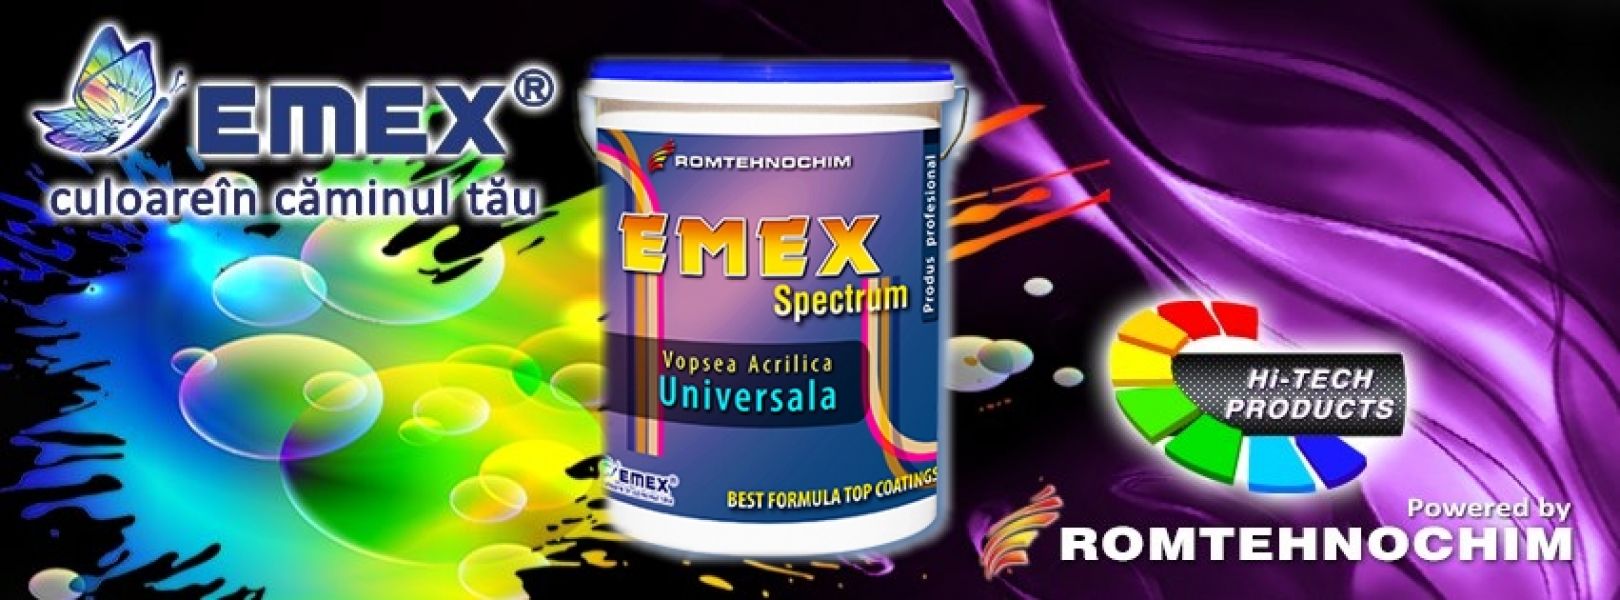 Vopsea Acrilica Universala EMEX SPECTRUM - 18.70  Ron/Kg – Gri